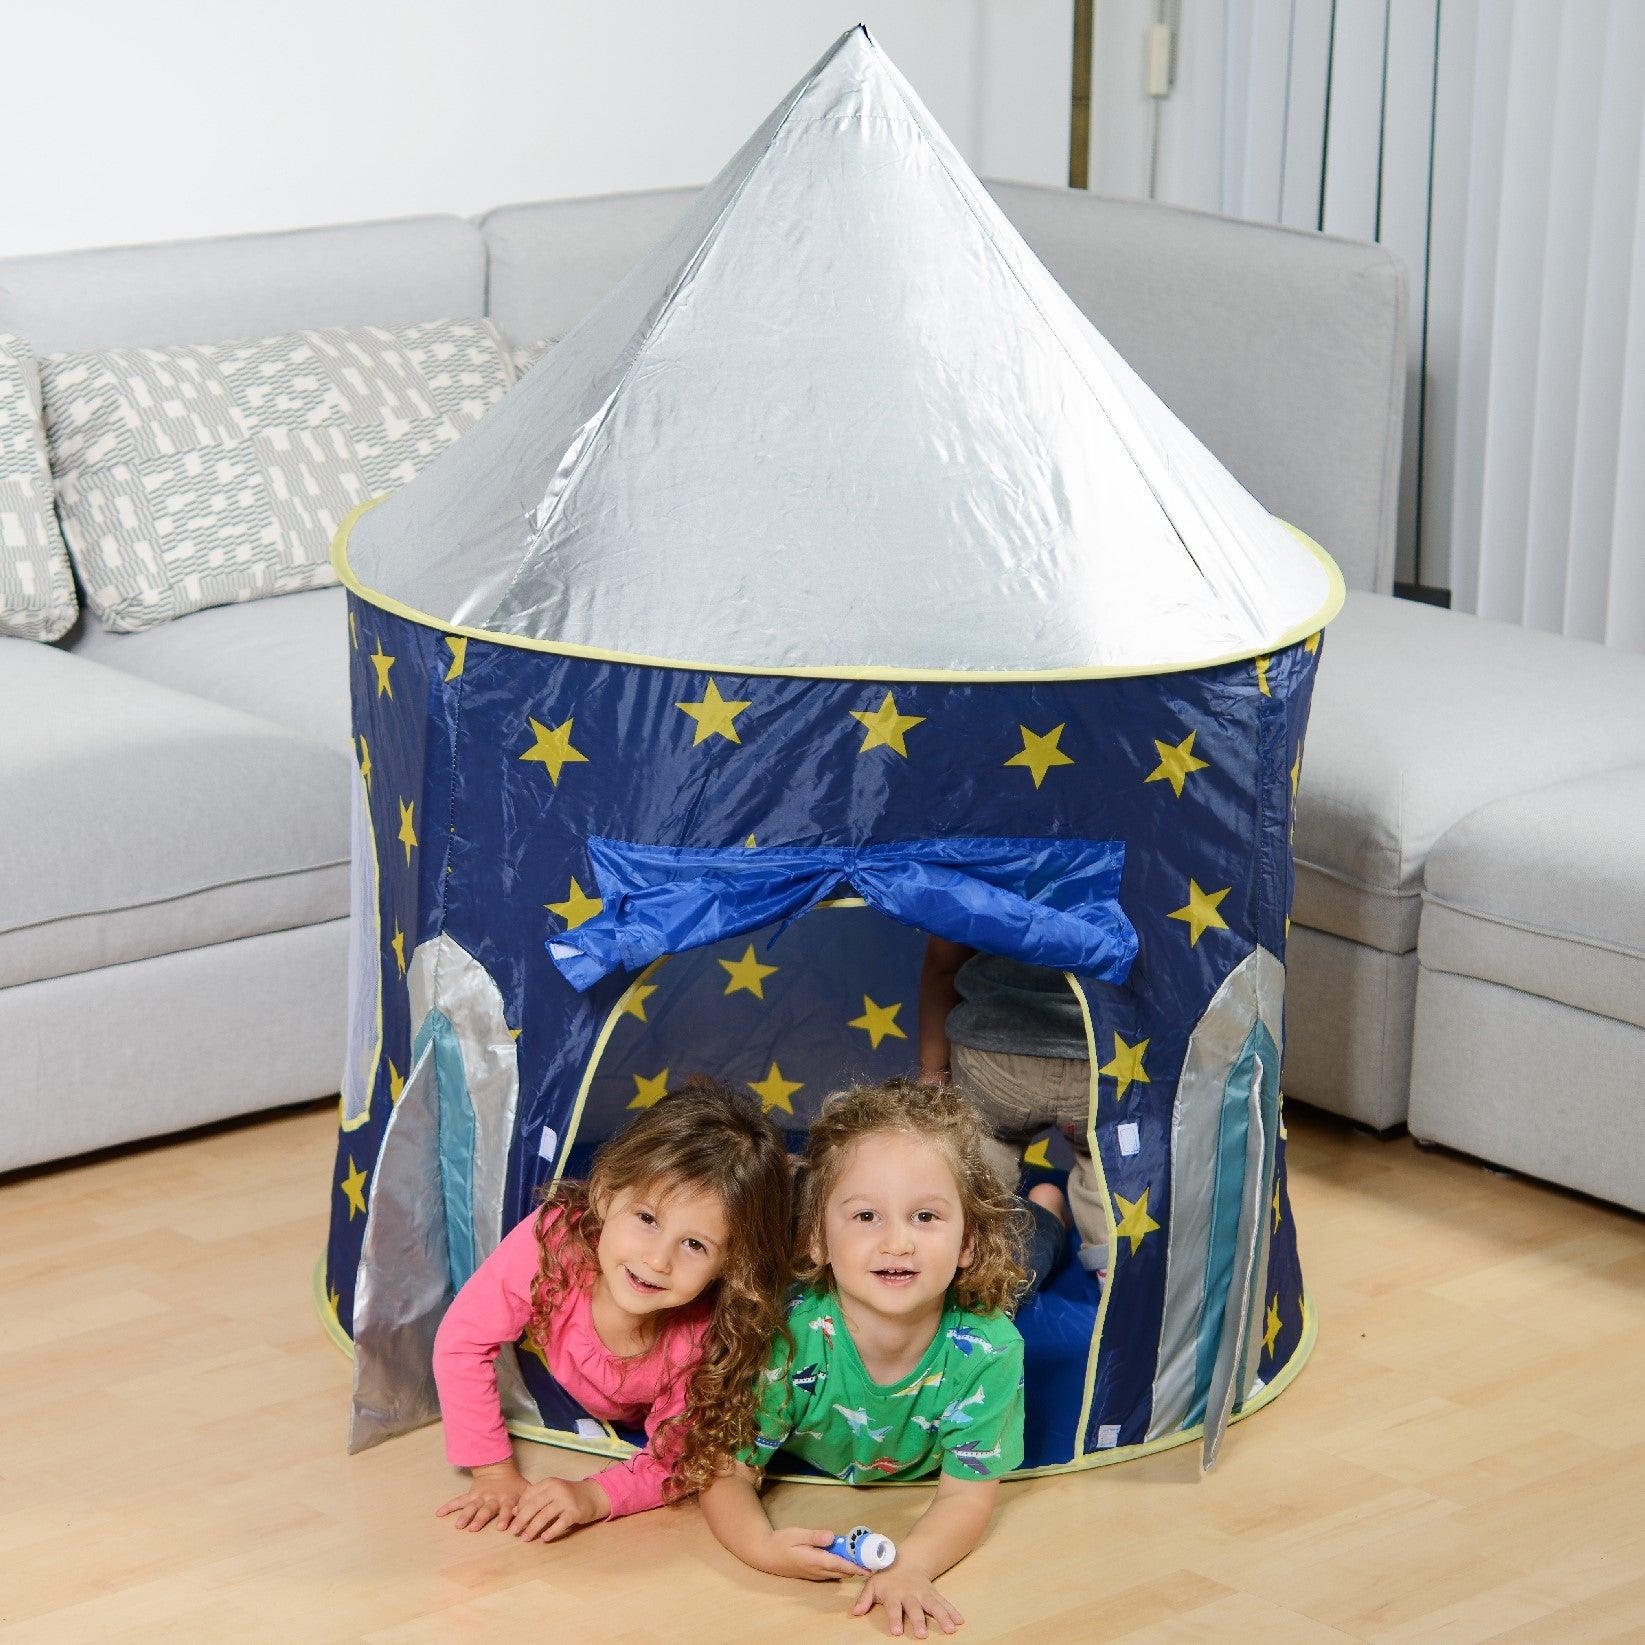 USA Toyz Rocket Ship Pop Up Kids Tent - Space-Themed Indoor Playhouse